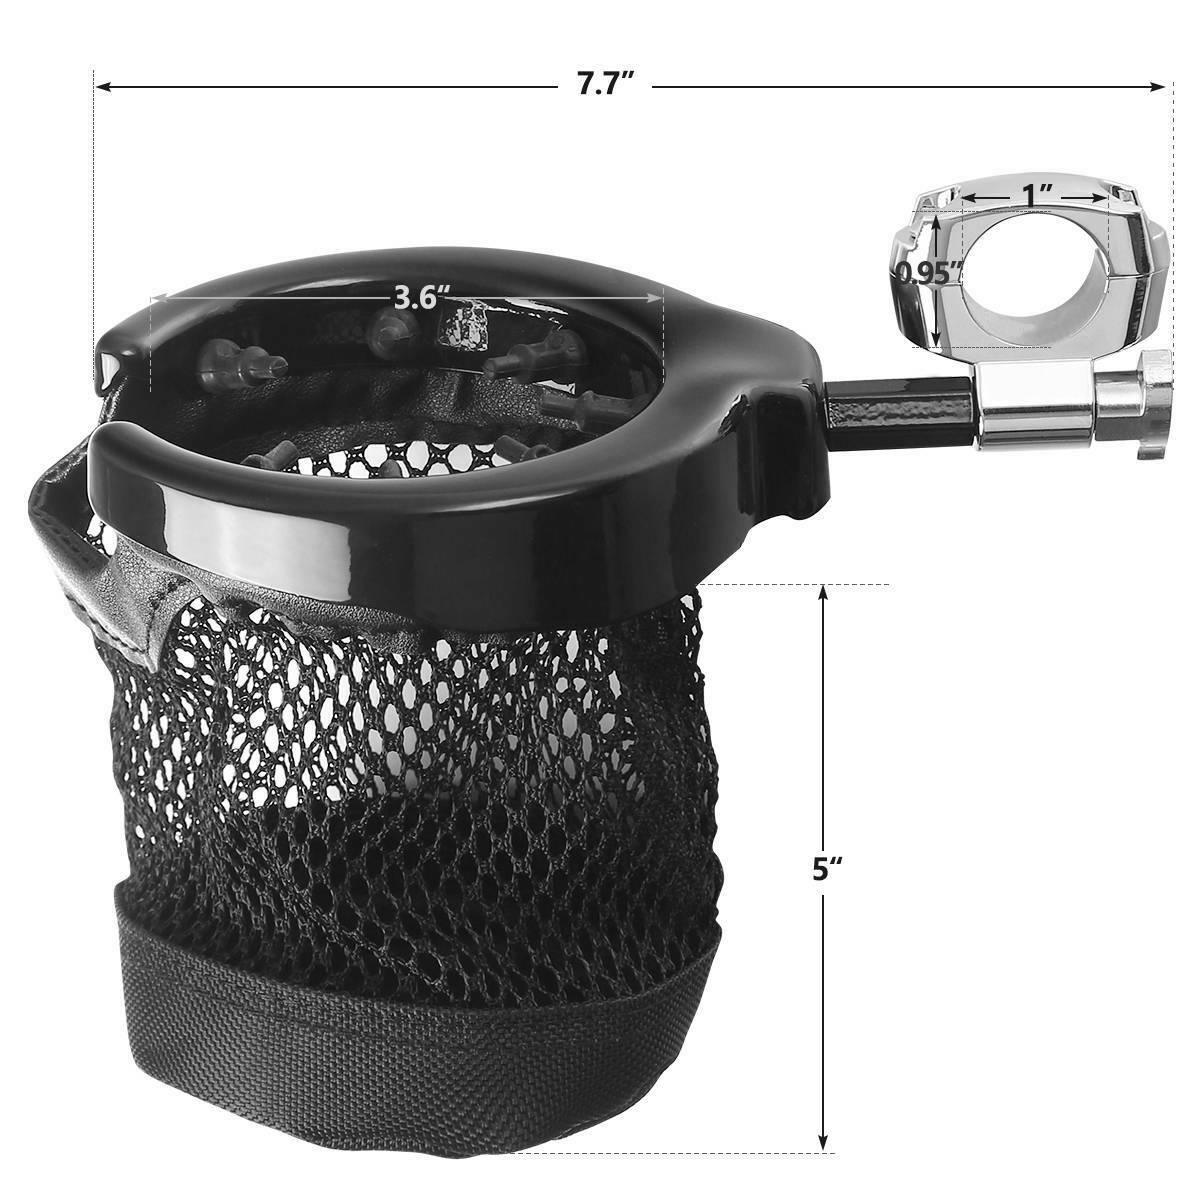 7/8" & 1" Handlebar Drink Cup Holder & Mesh Basket Fit For Harley Touring Glide - Moto Life Products